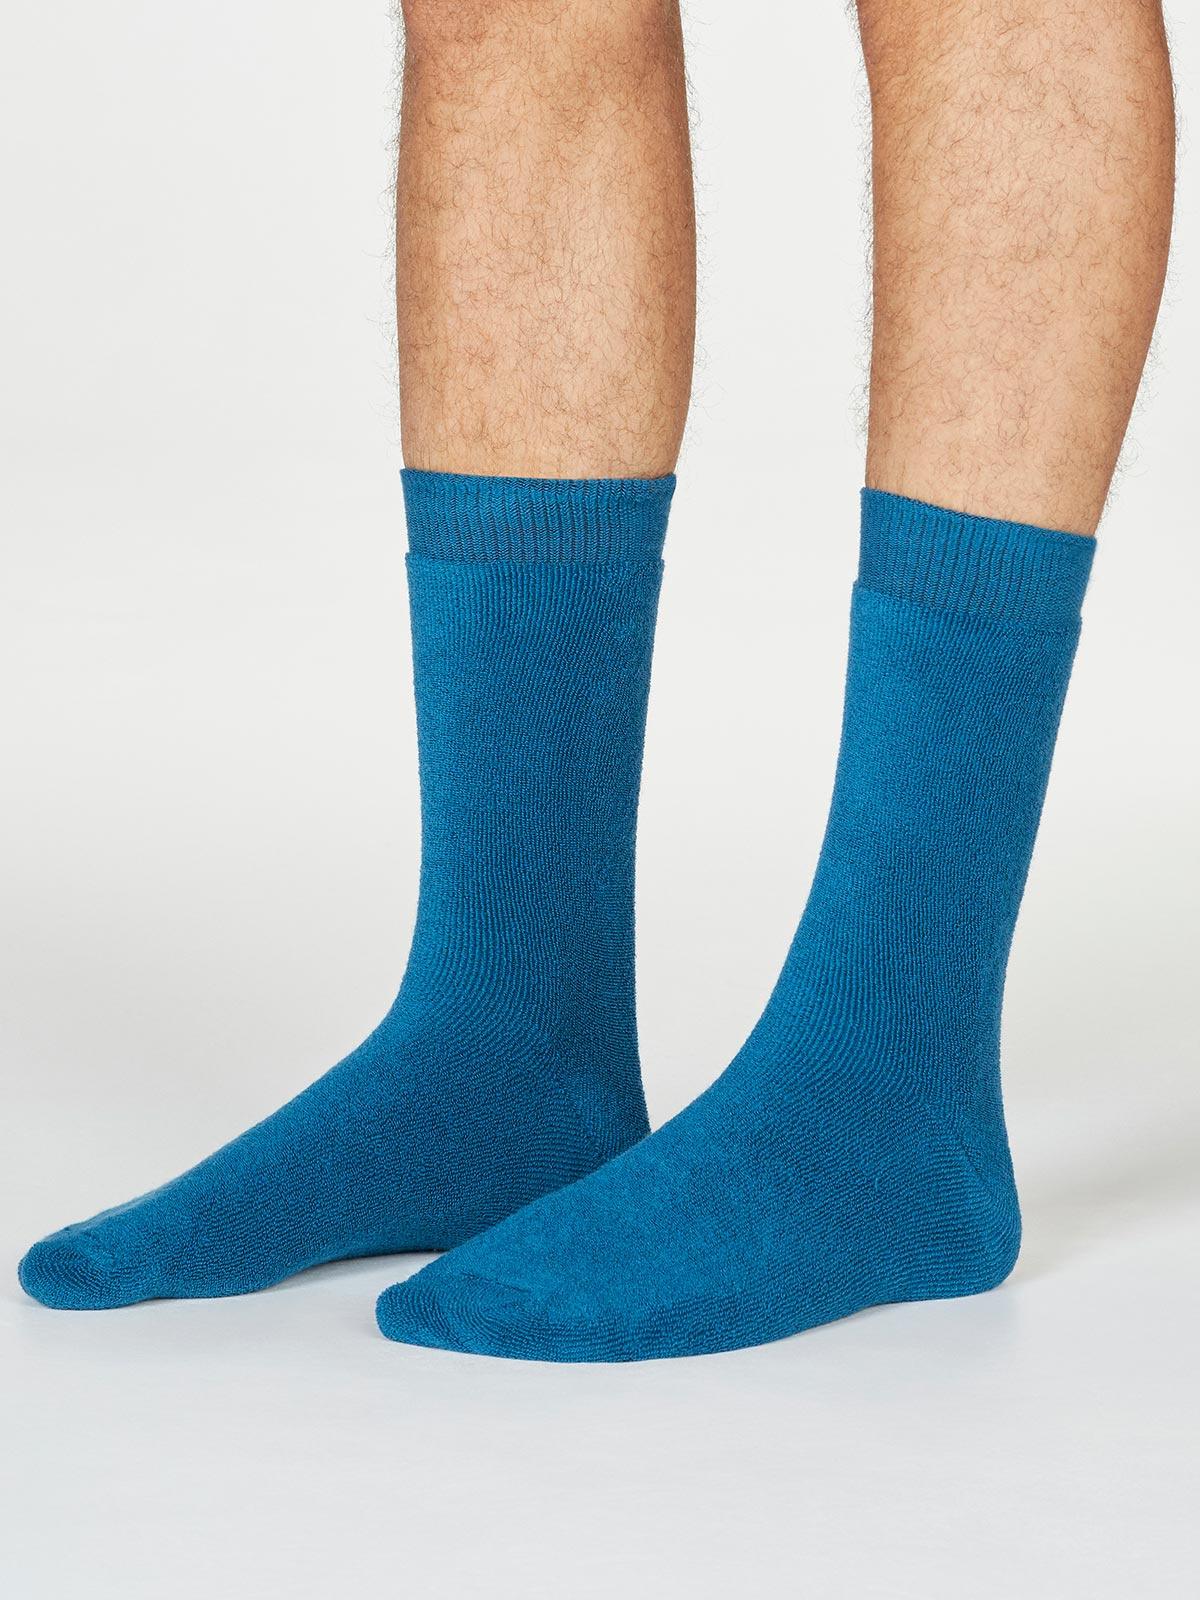 Walker Socks - Ink Blue - Thought Clothing UK